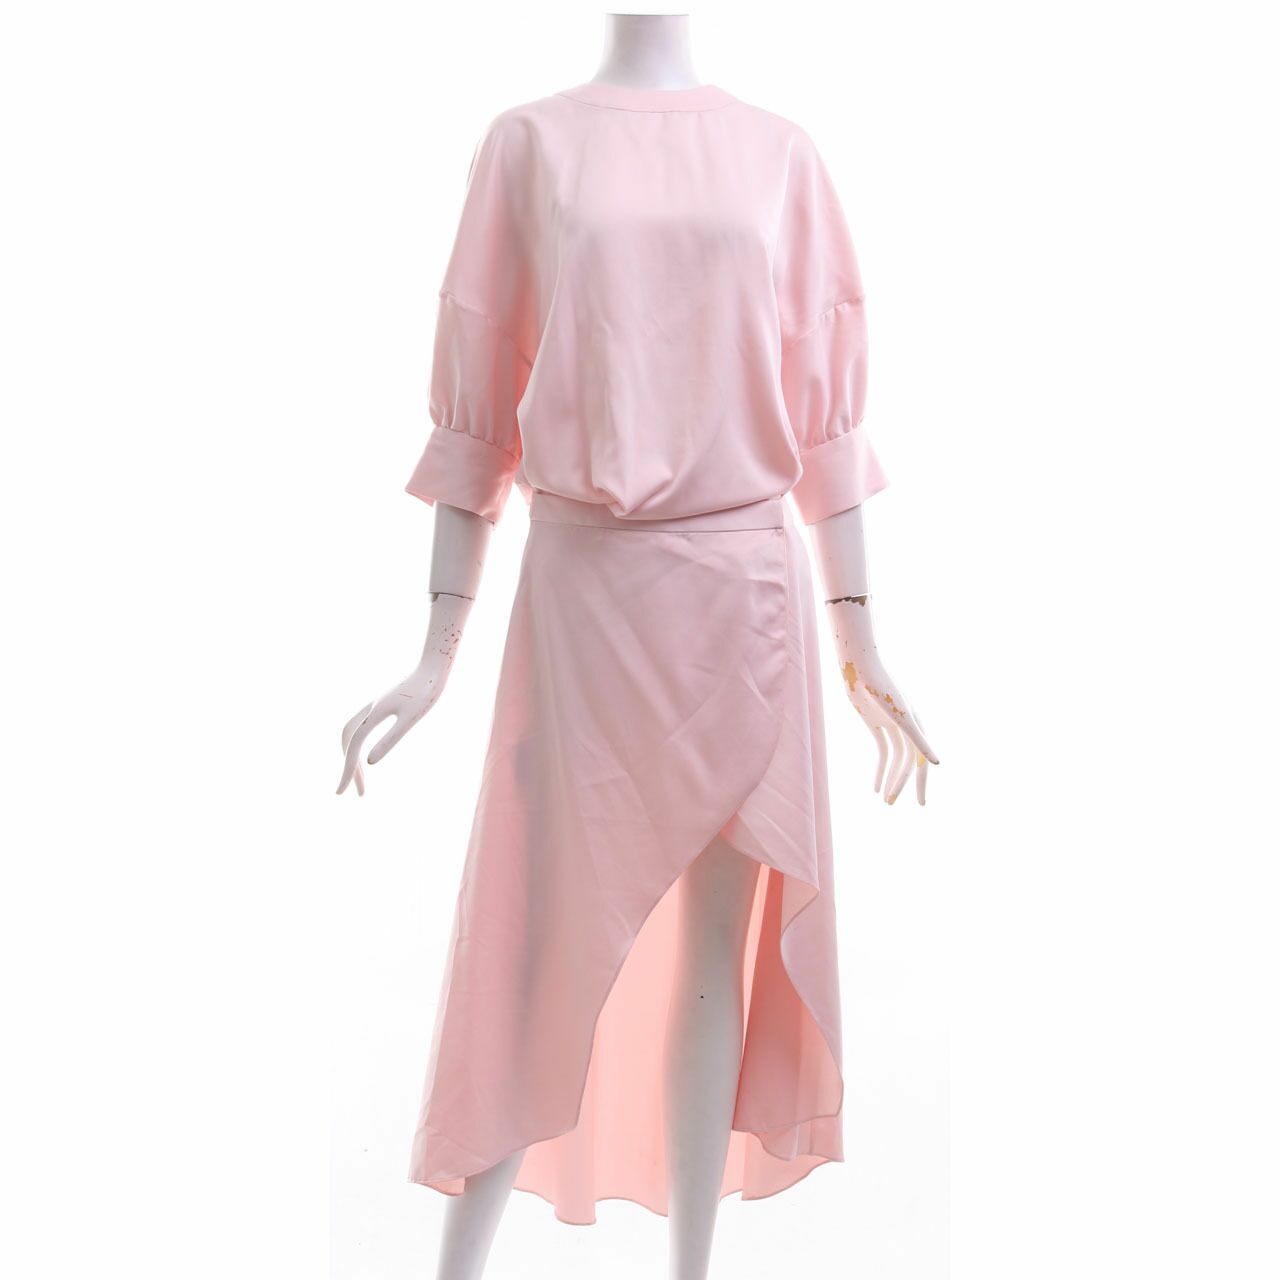 Kle Pink Midi Dress